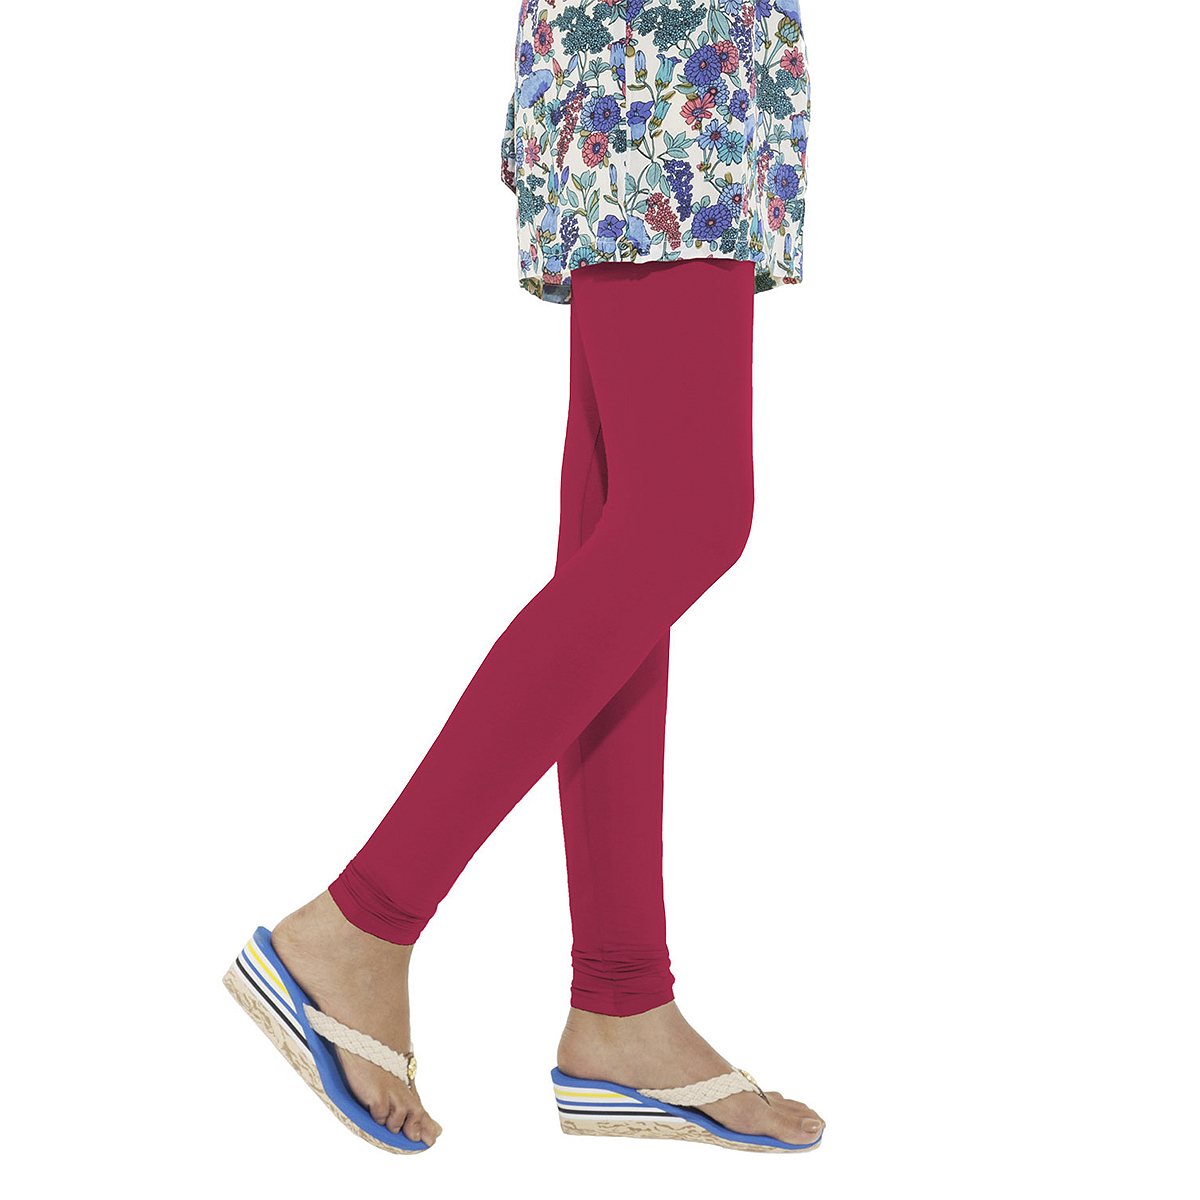 Buy Go Colors Women Solid Color Churidar Legging - Fuchsia Online - Lulu  Hypermarket India